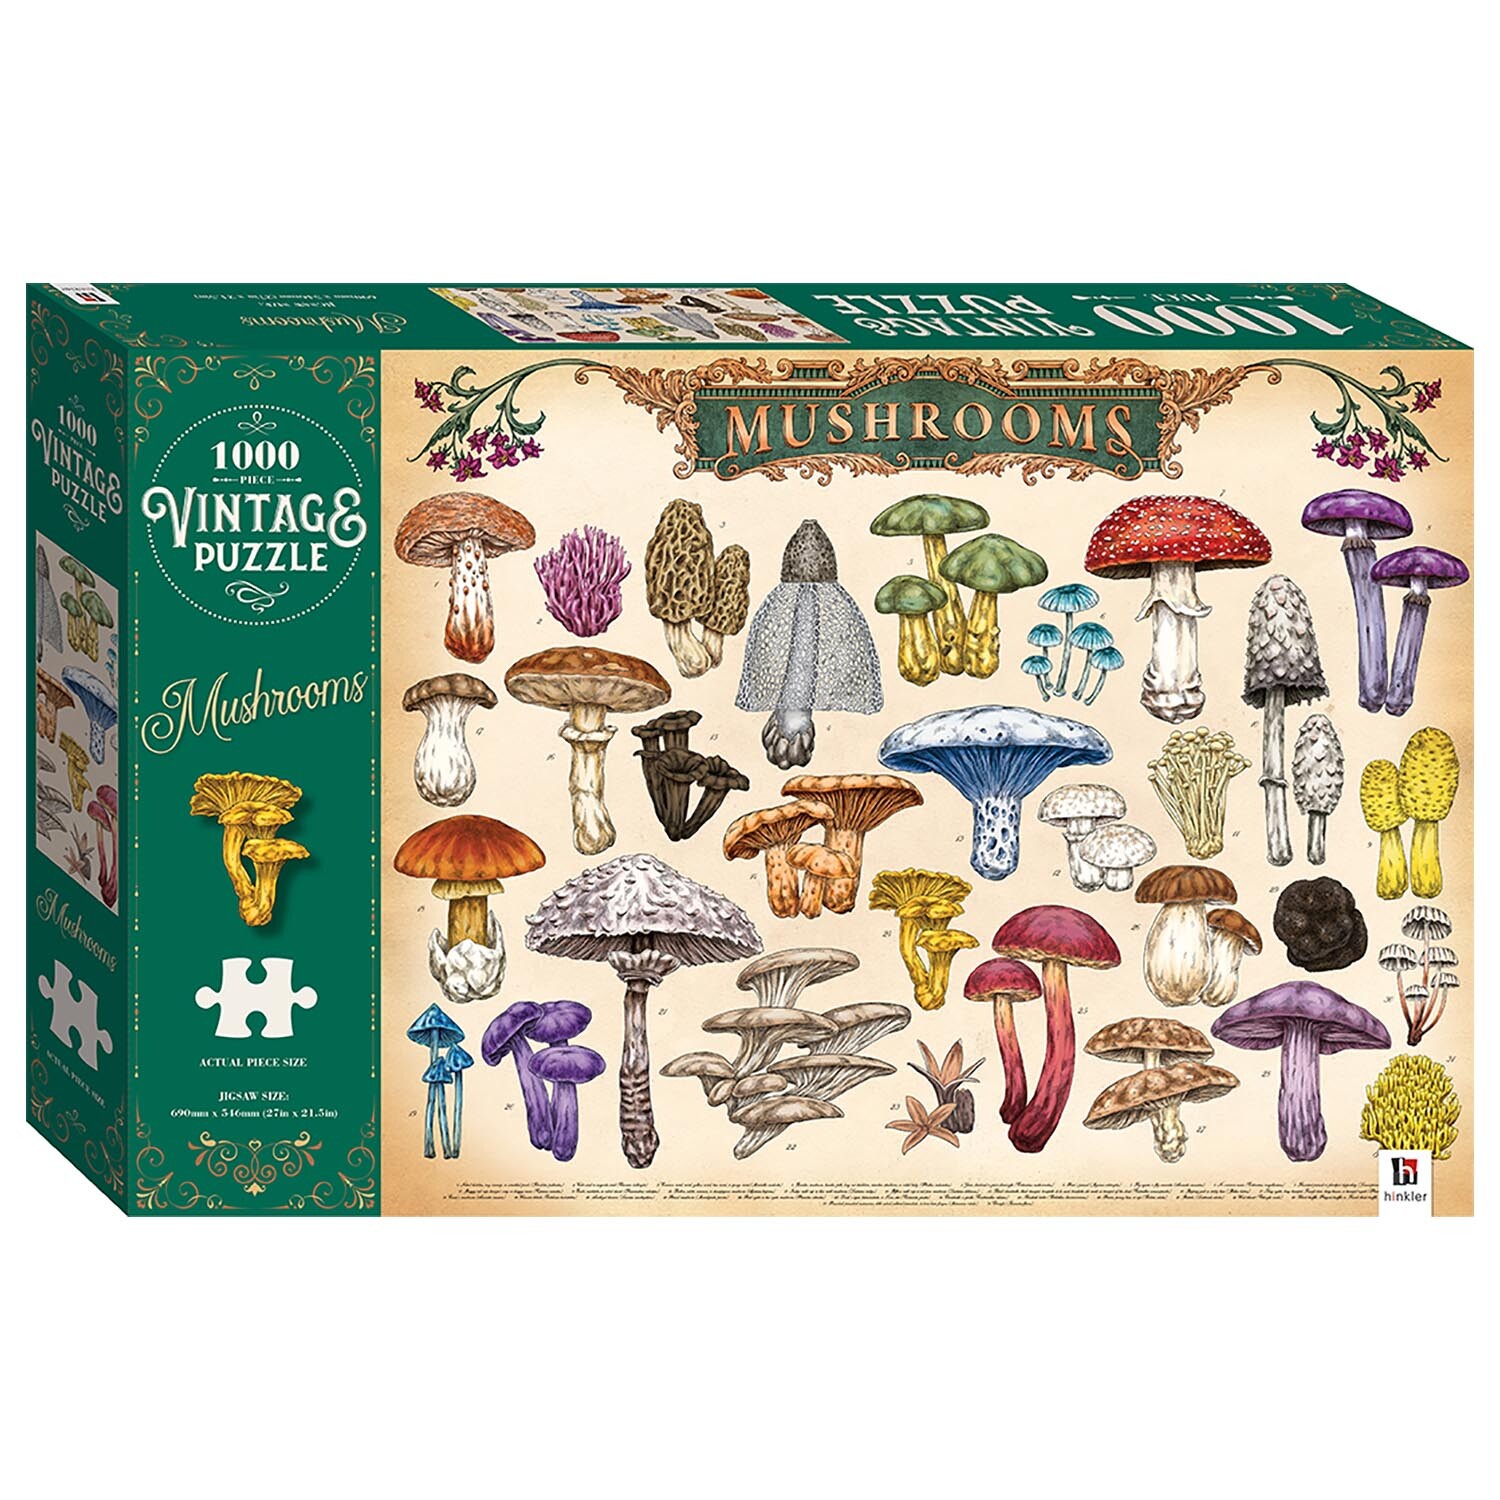 Hinkler Mushrooms Vintage Puzzle 1000 Piece Image